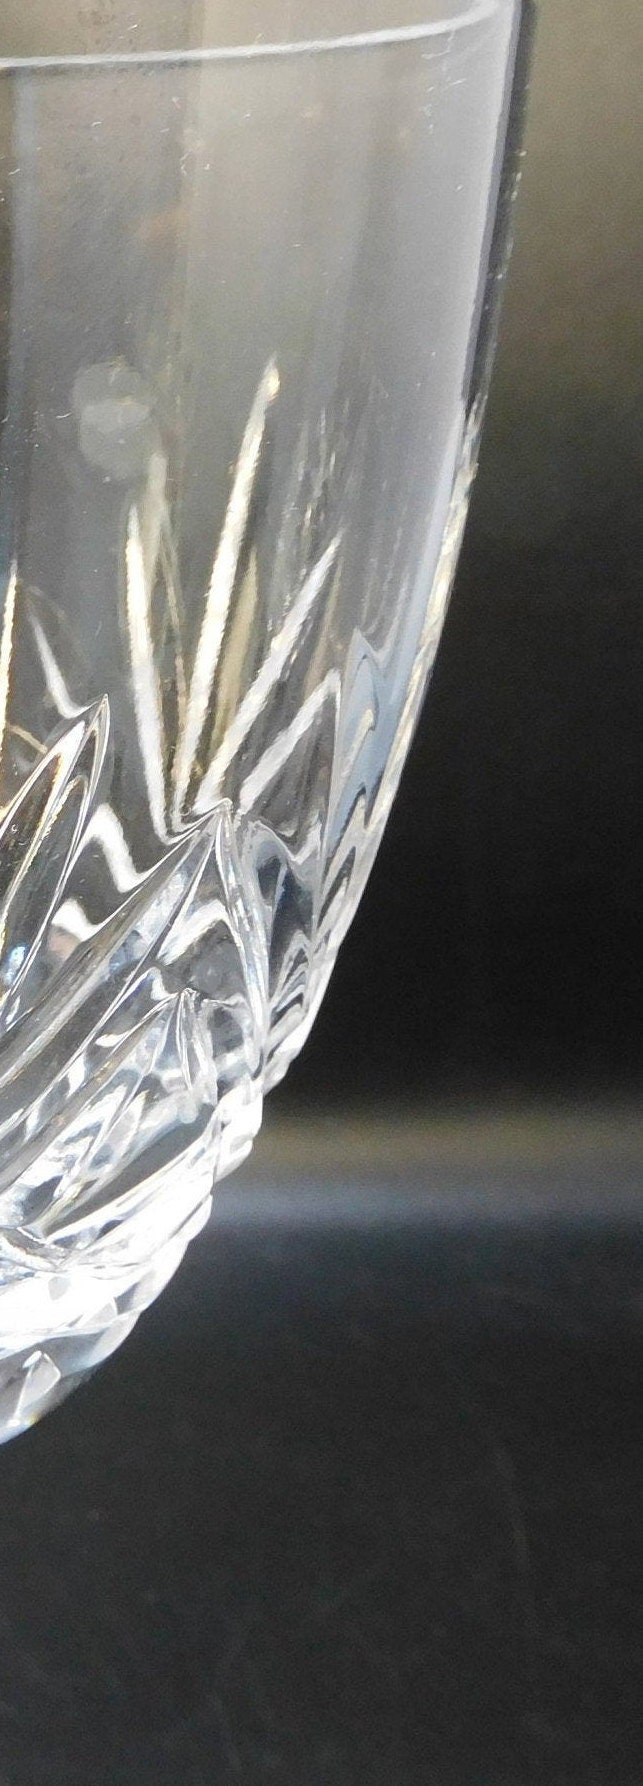 Copa de vino de cristal cortado Turín